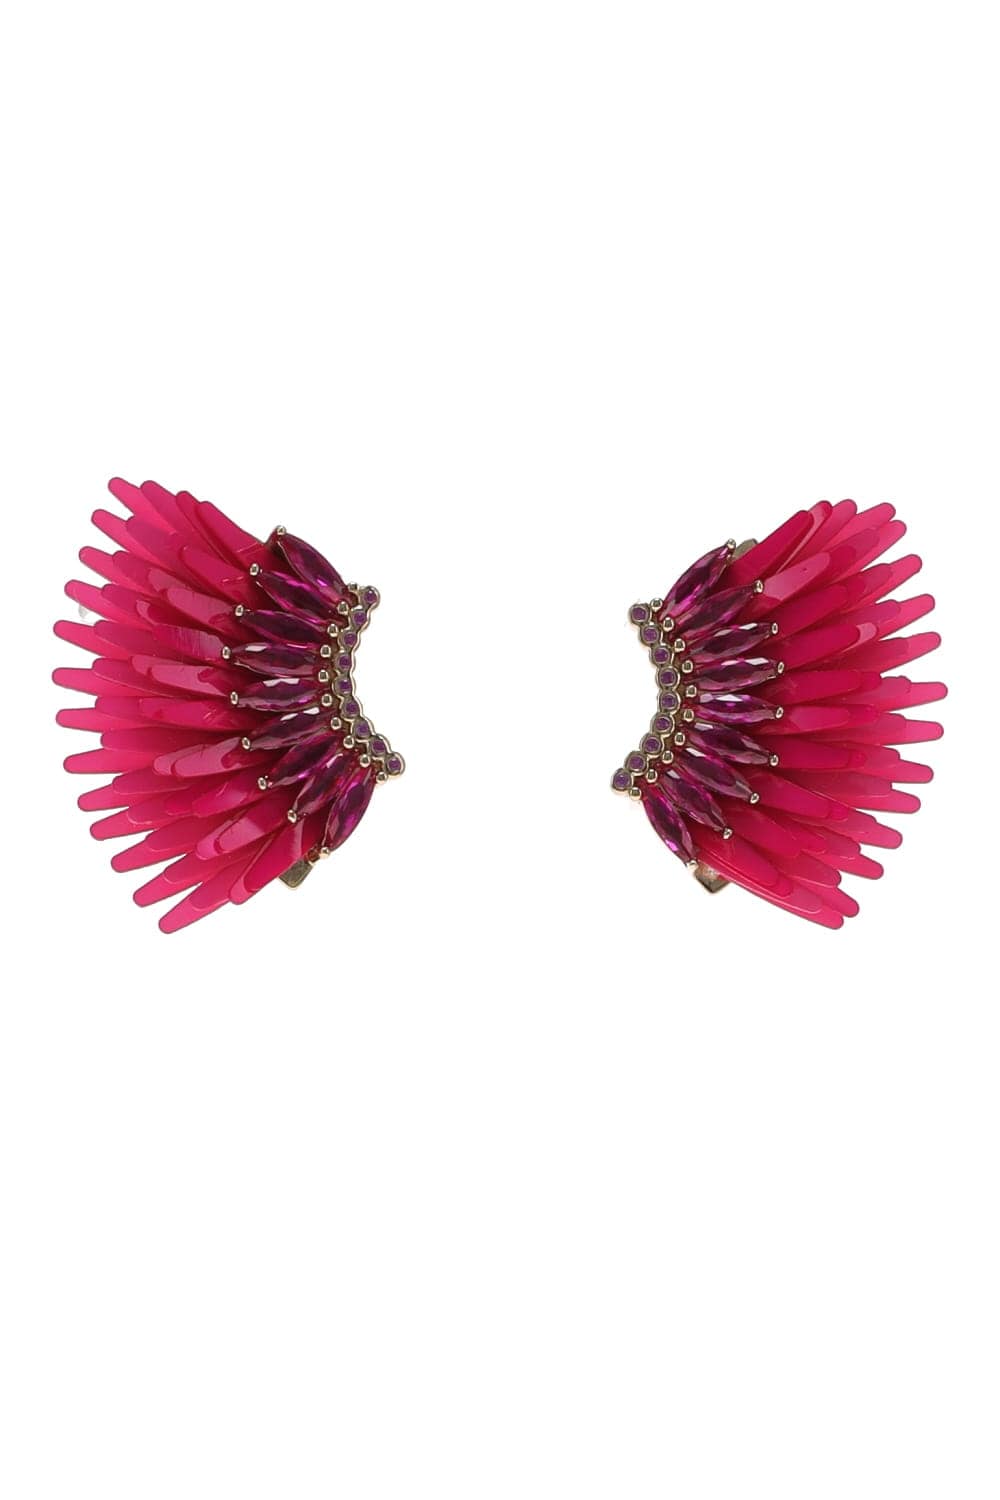 Mignonne Gavigan Lux Mini Madeline Light Pink Earrings